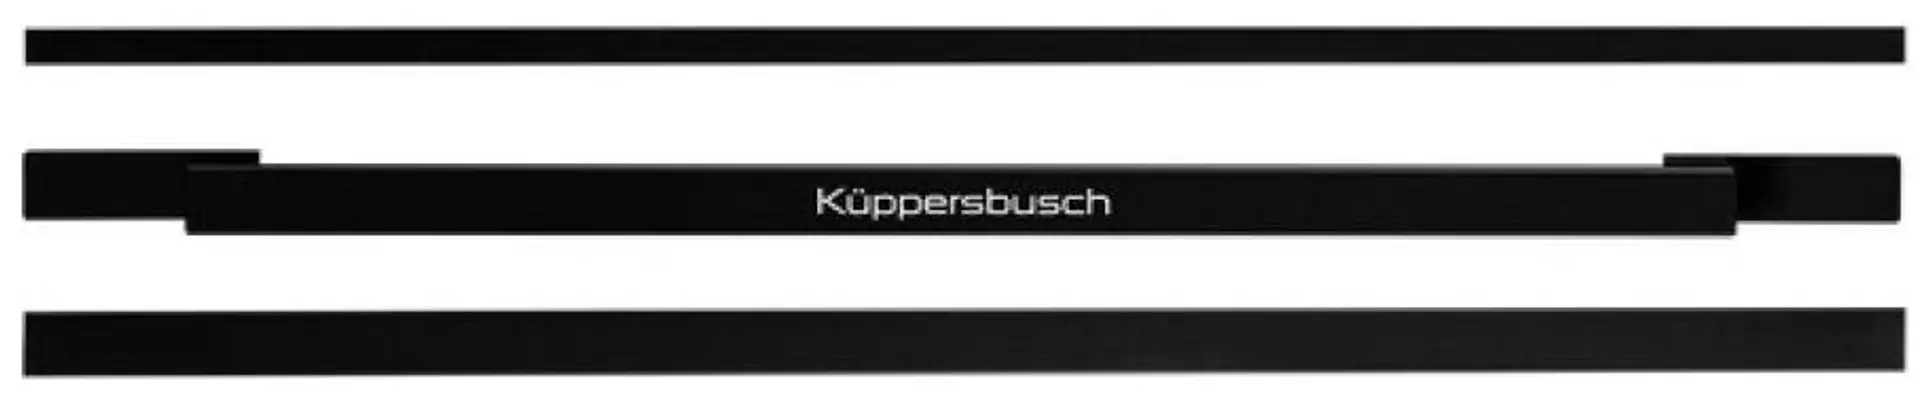 DK5004-Kuppersbusch-Koel-vries-accessoires